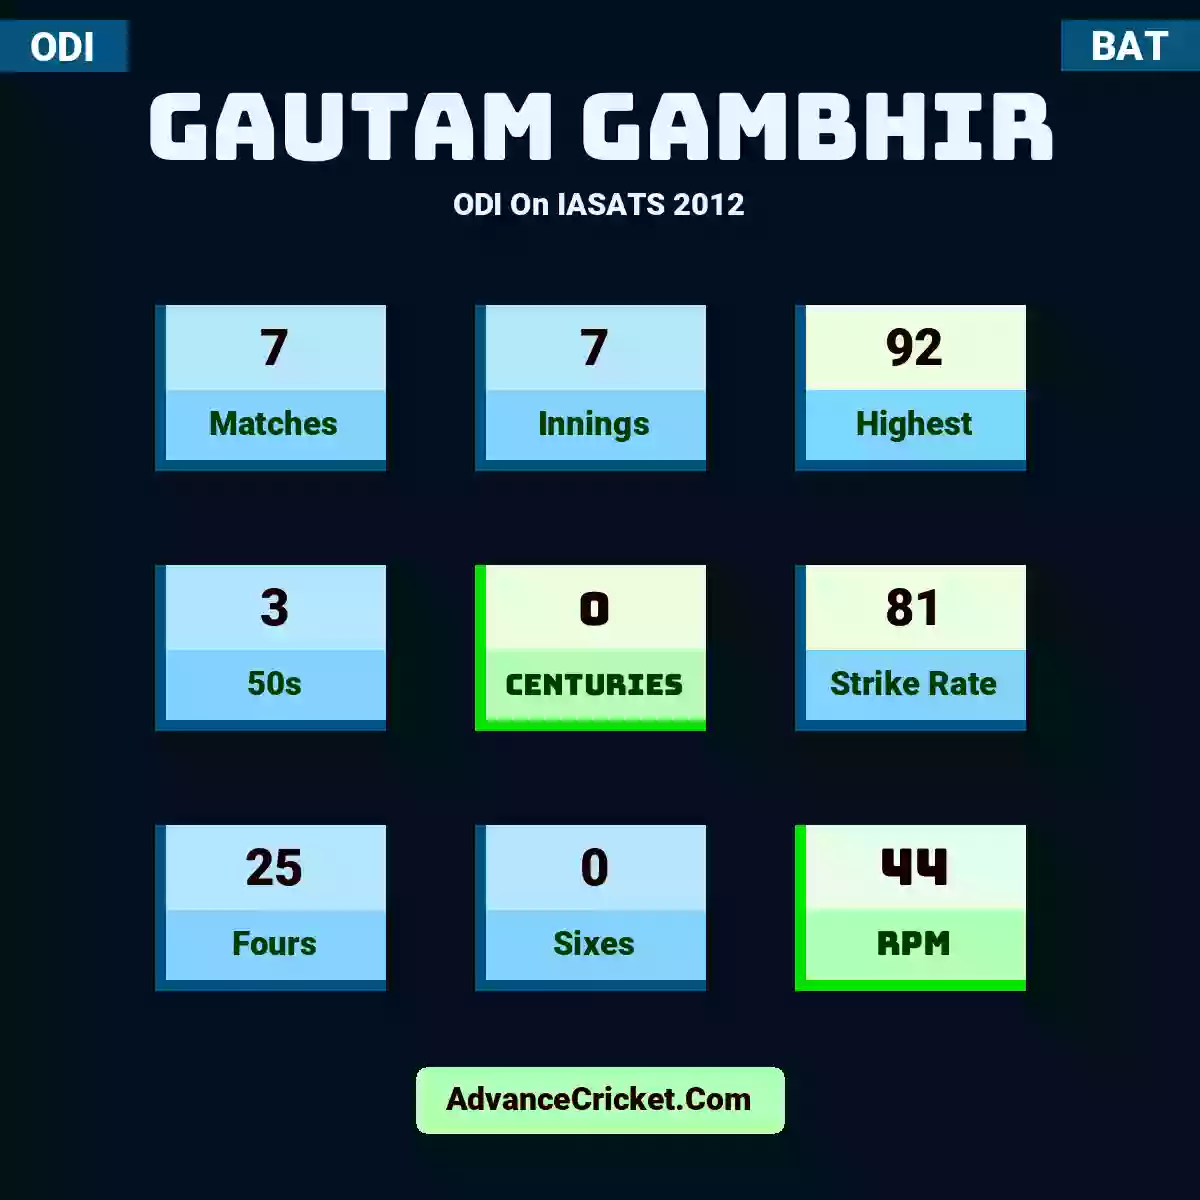 Gautam Gambhir ODI  On IASATS 2012, Gautam Gambhir played 7 matches, scored 92 runs as highest, 3 half-centuries, and 0 centuries, with a strike rate of 81. G.Gambhir hit 25 fours and 0 sixes, with an RPM of 44.